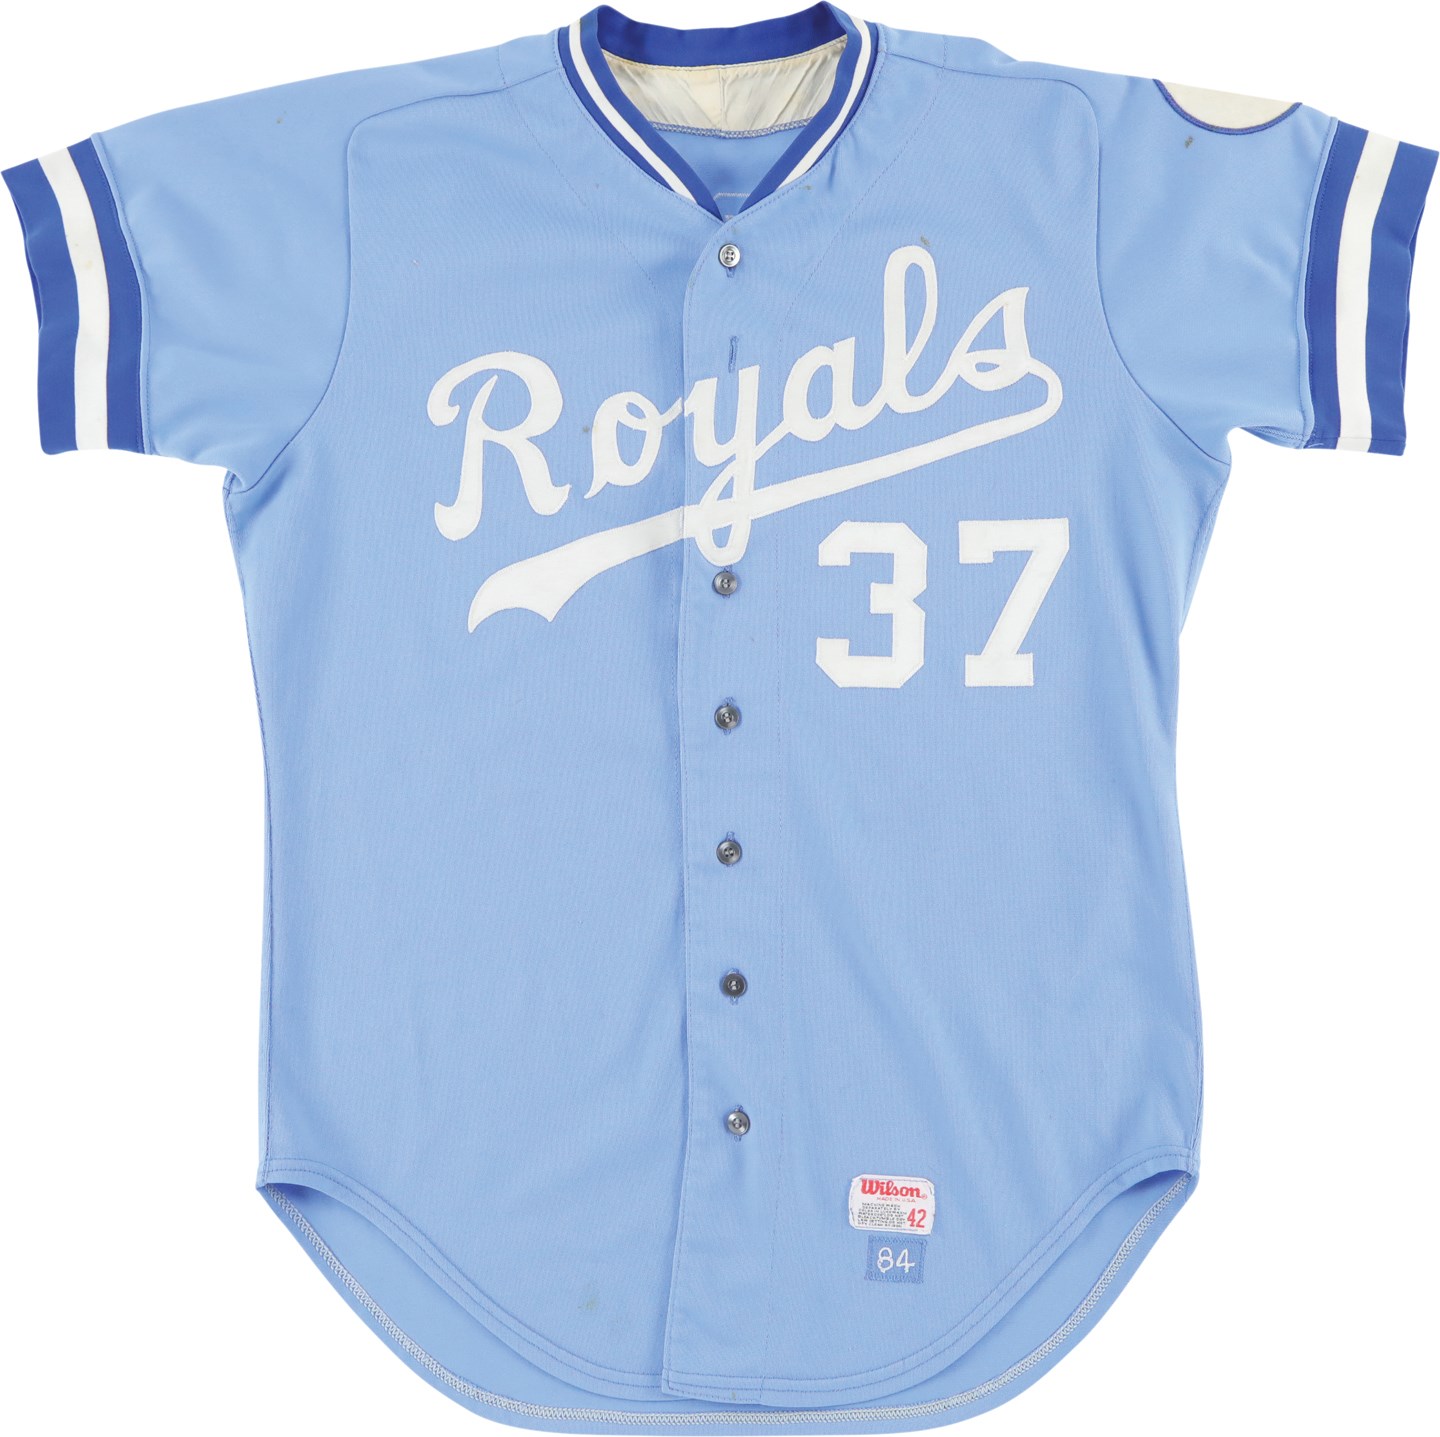 Baseball Equipment - 1984 Charlie Leibrandt Kanas City Royals Game Worn Jersey